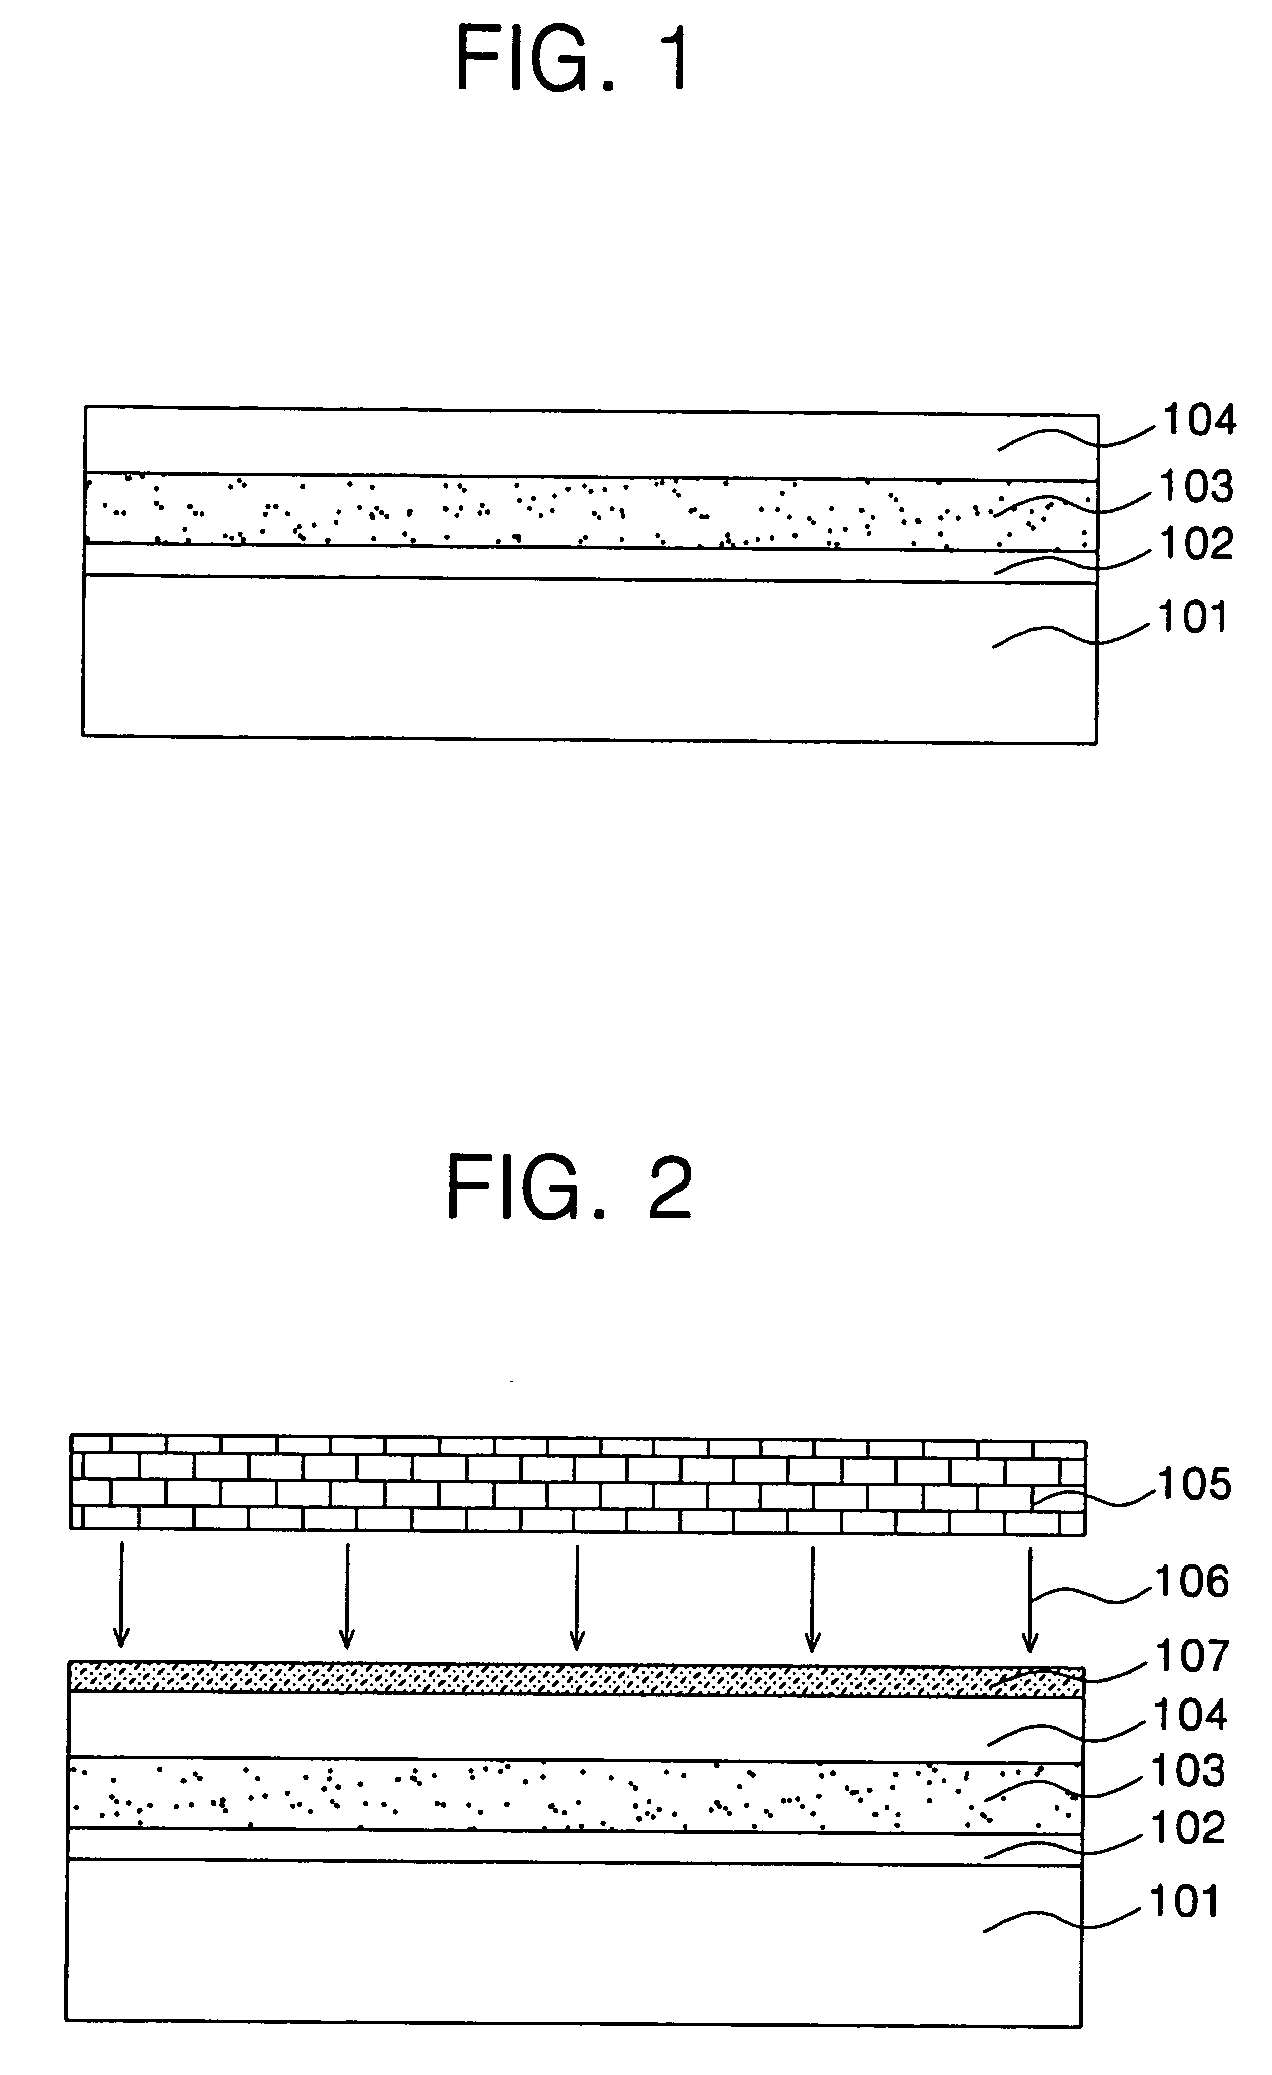 Method for fabricating thin film transistor